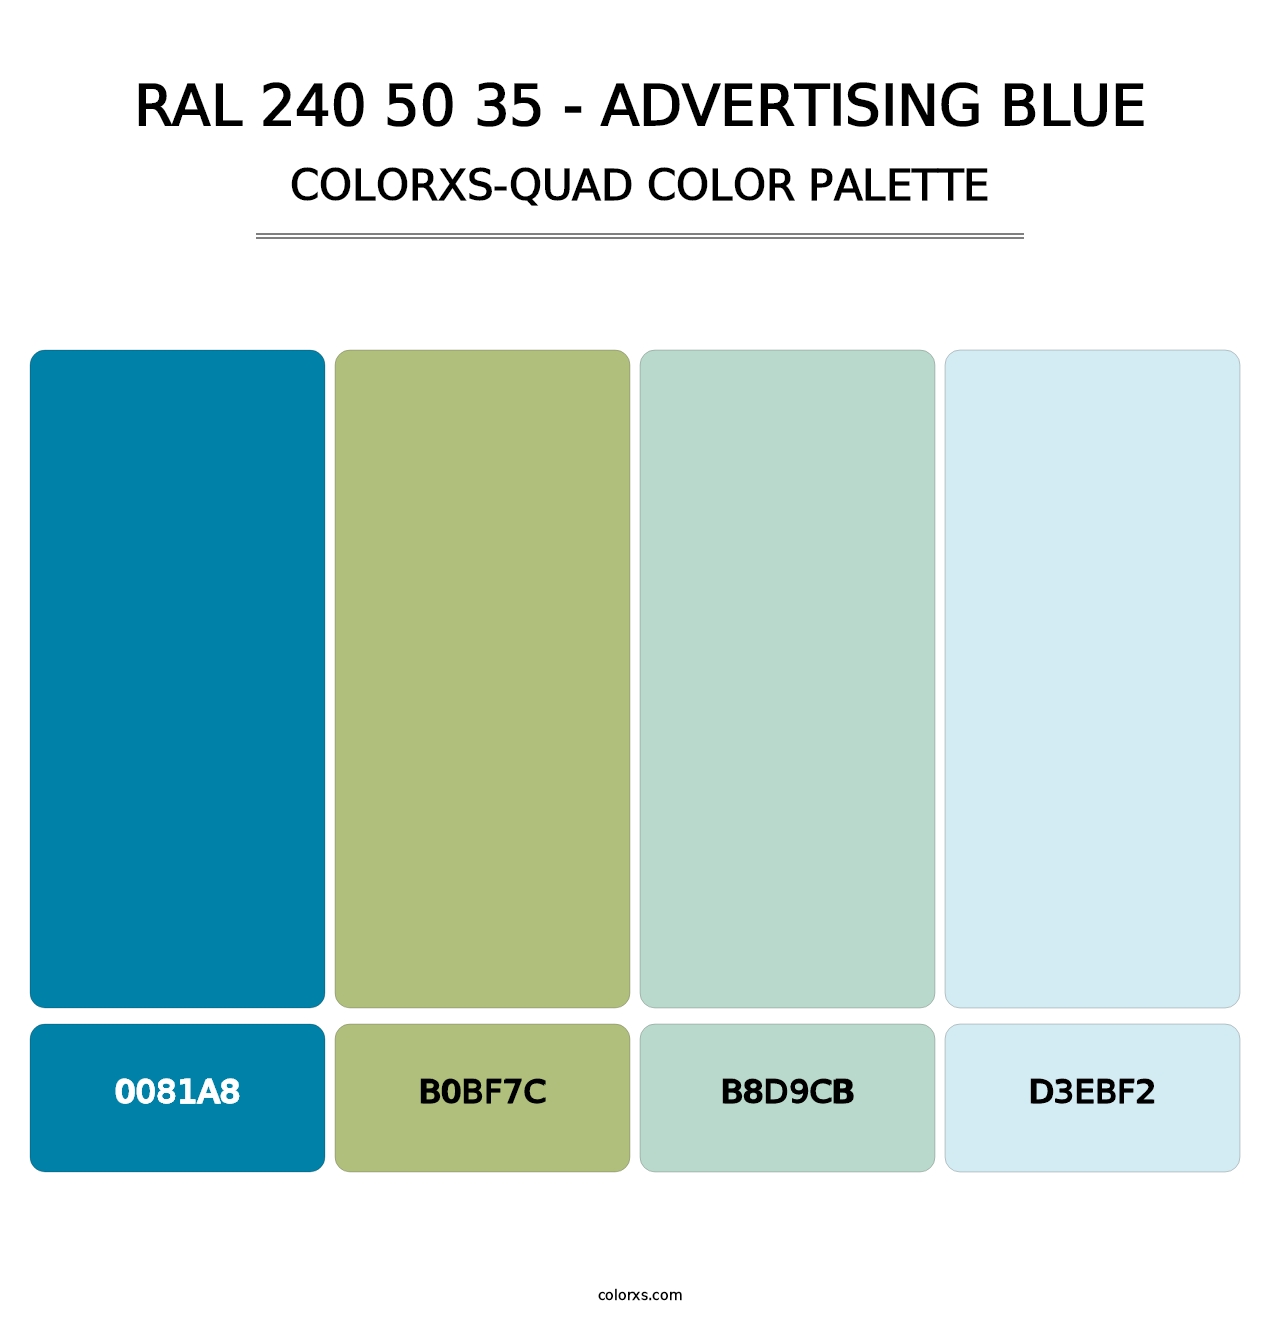 RAL 240 50 35 - Advertising Blue - Colorxs Quad Palette